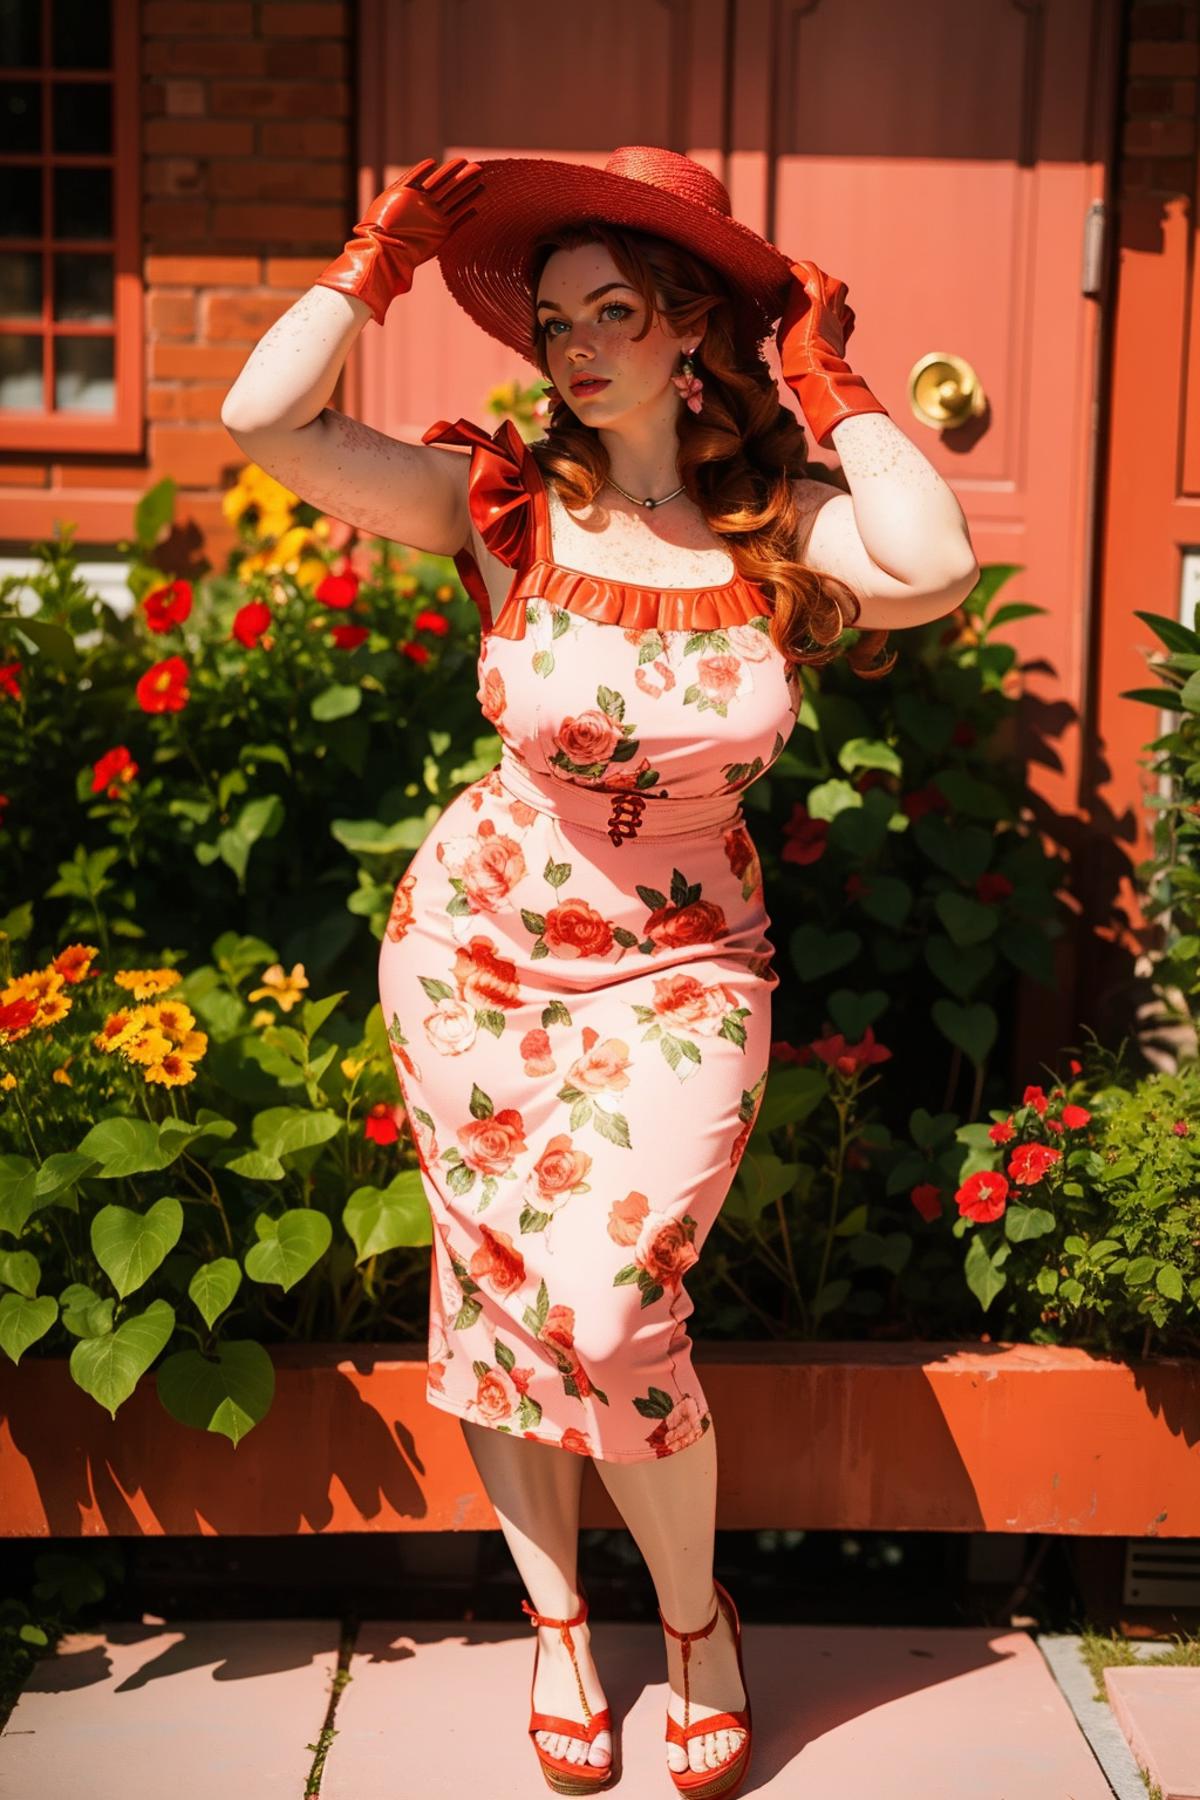 Floral Wiggle Vix Dress image by freckledvixon